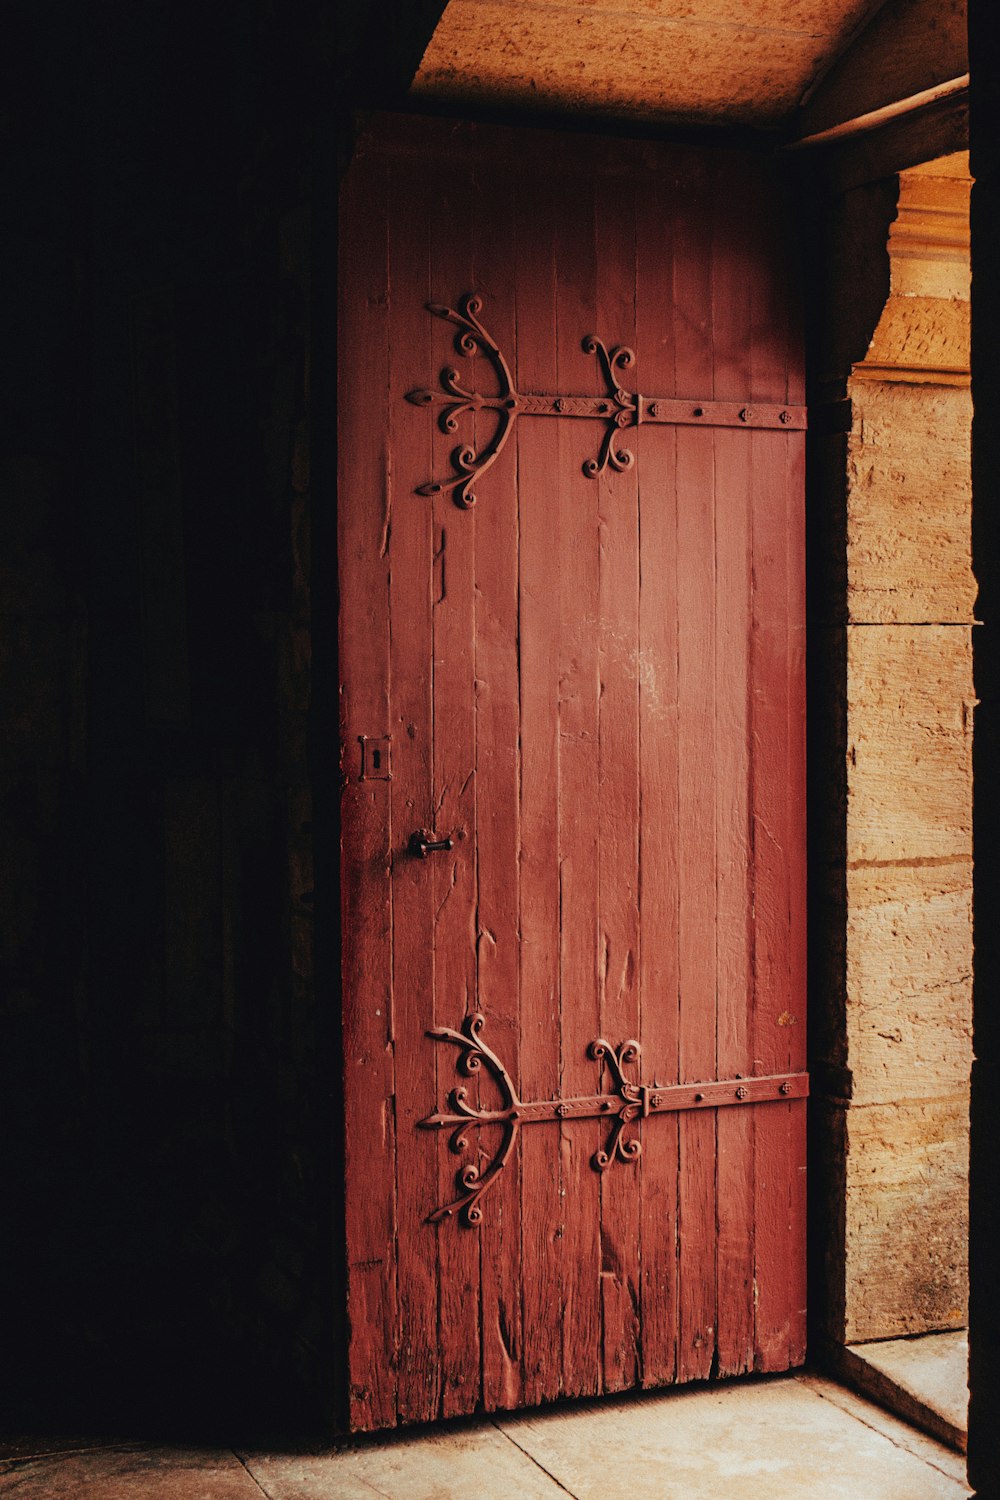 a red wooden door with a metal handle